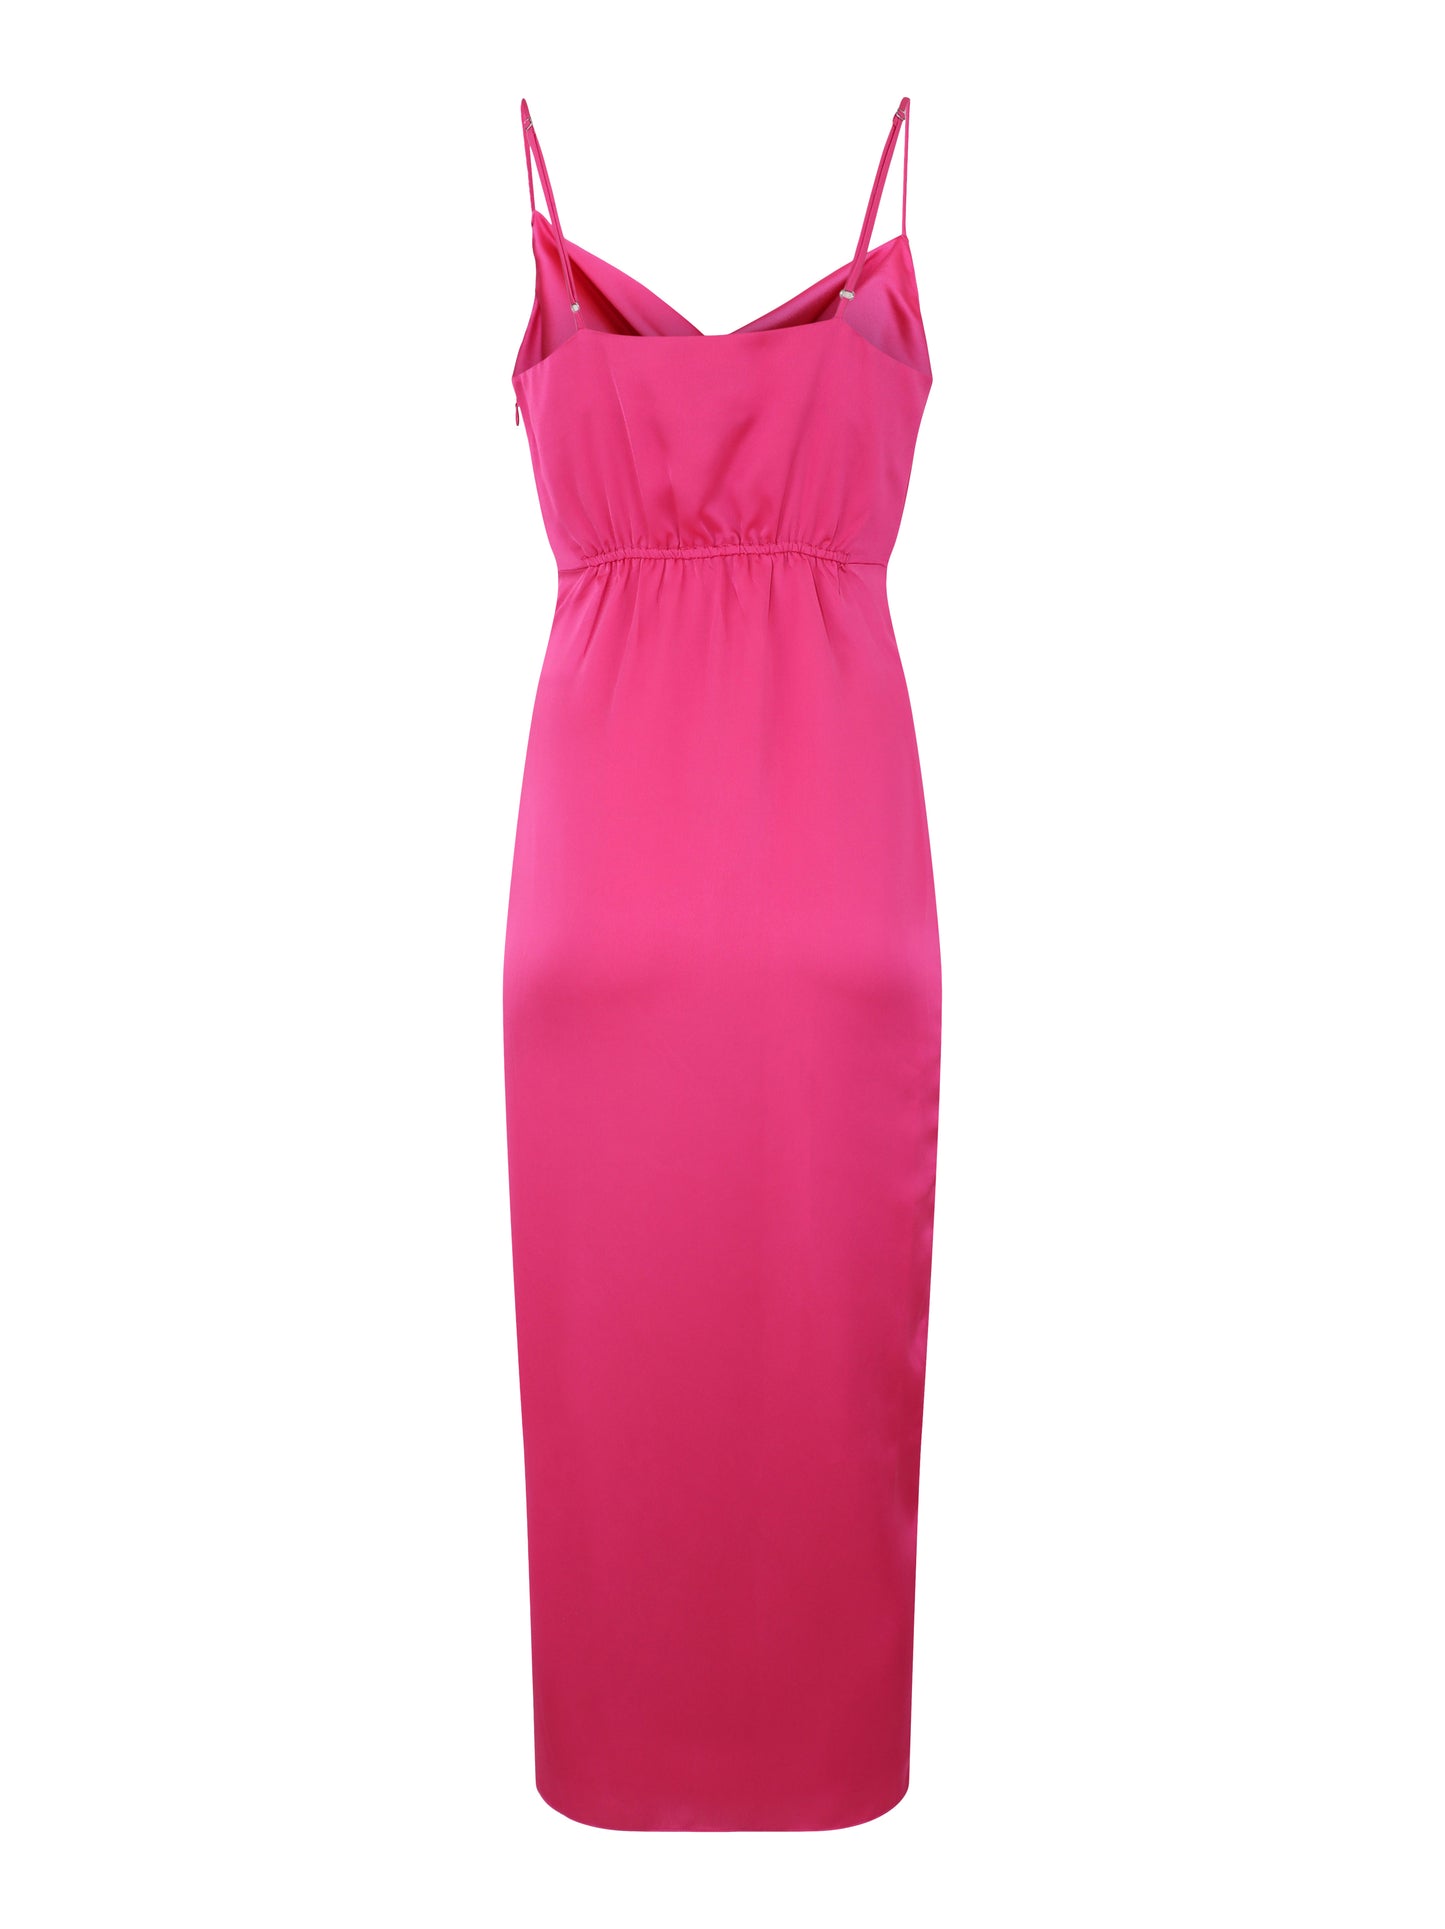 Milly Lilliana Pink Slip Dress